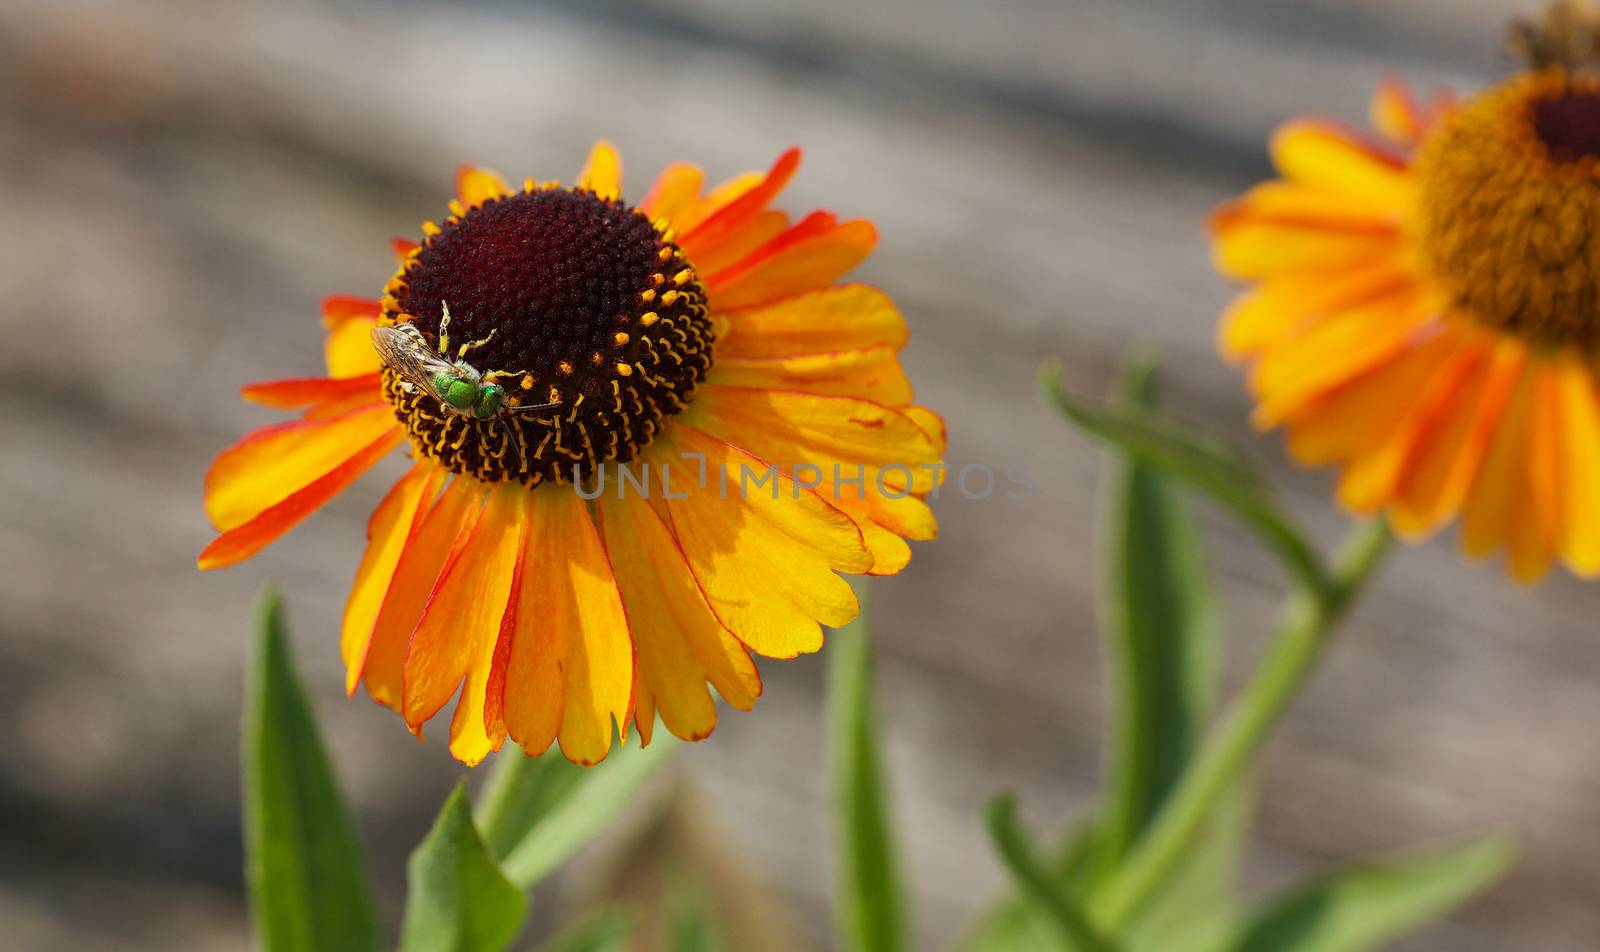 Metallic Green Bee on Orange cone flower with blurred background